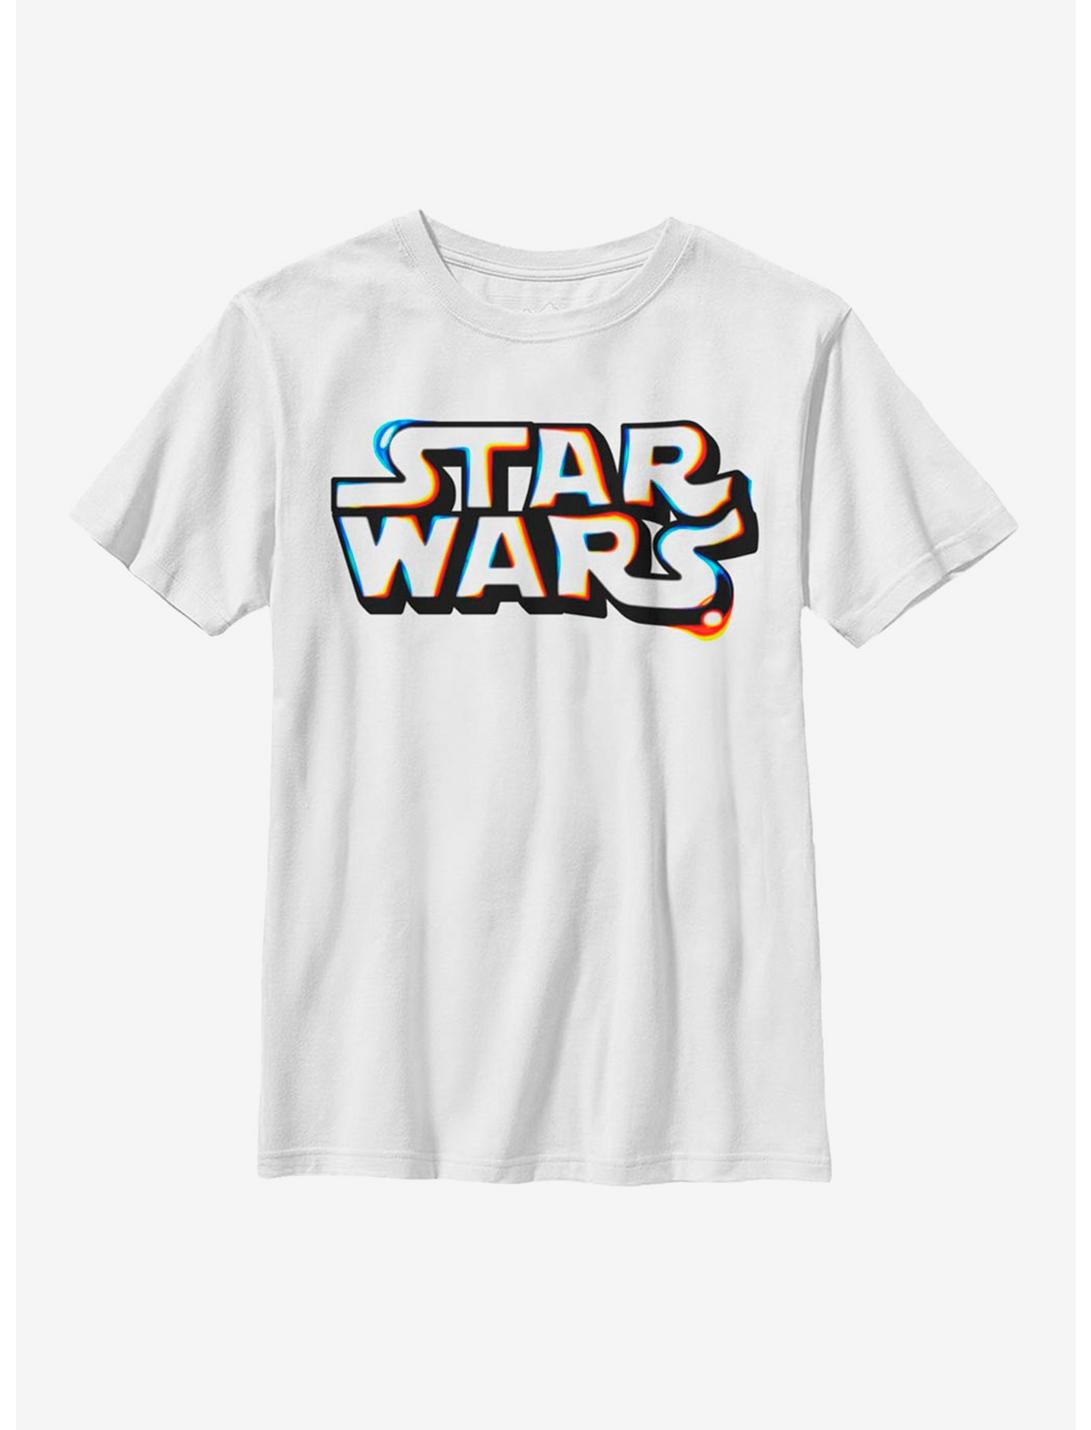 Star Wars Thermal Image Logo Youth T-Shirt, WHITE, hi-res